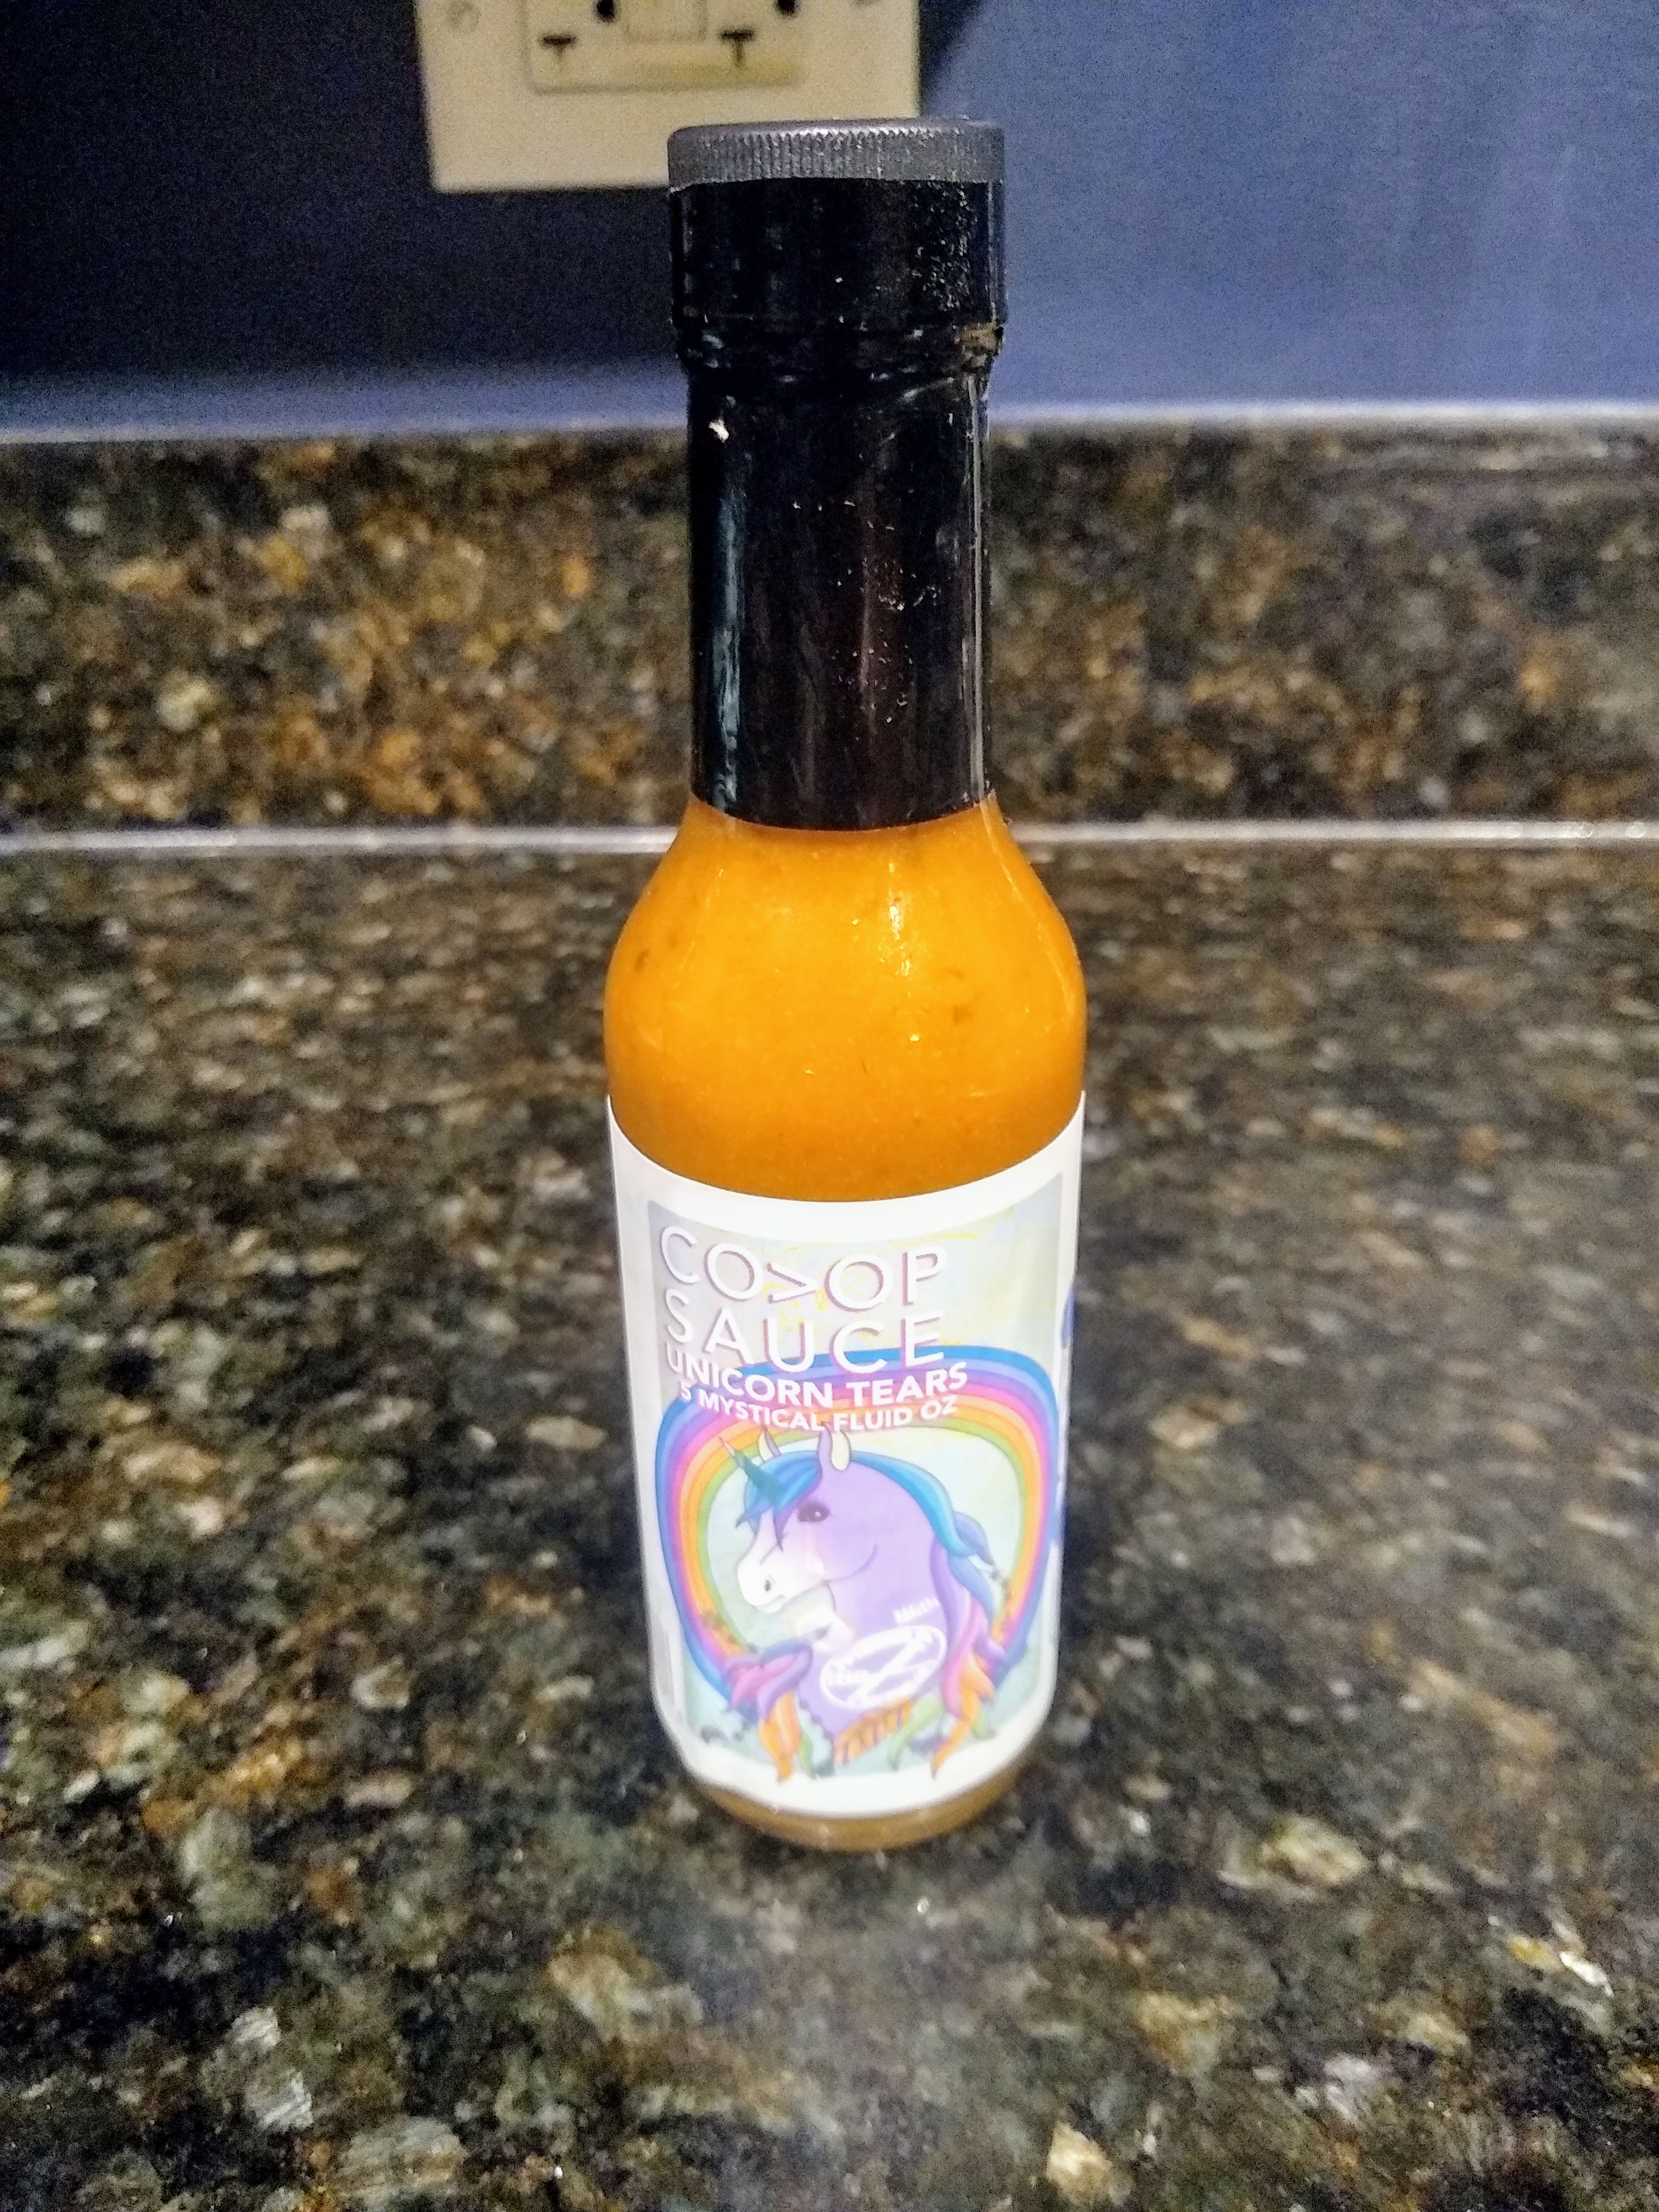 Co-Op Hot Sauce Unicorn Tears